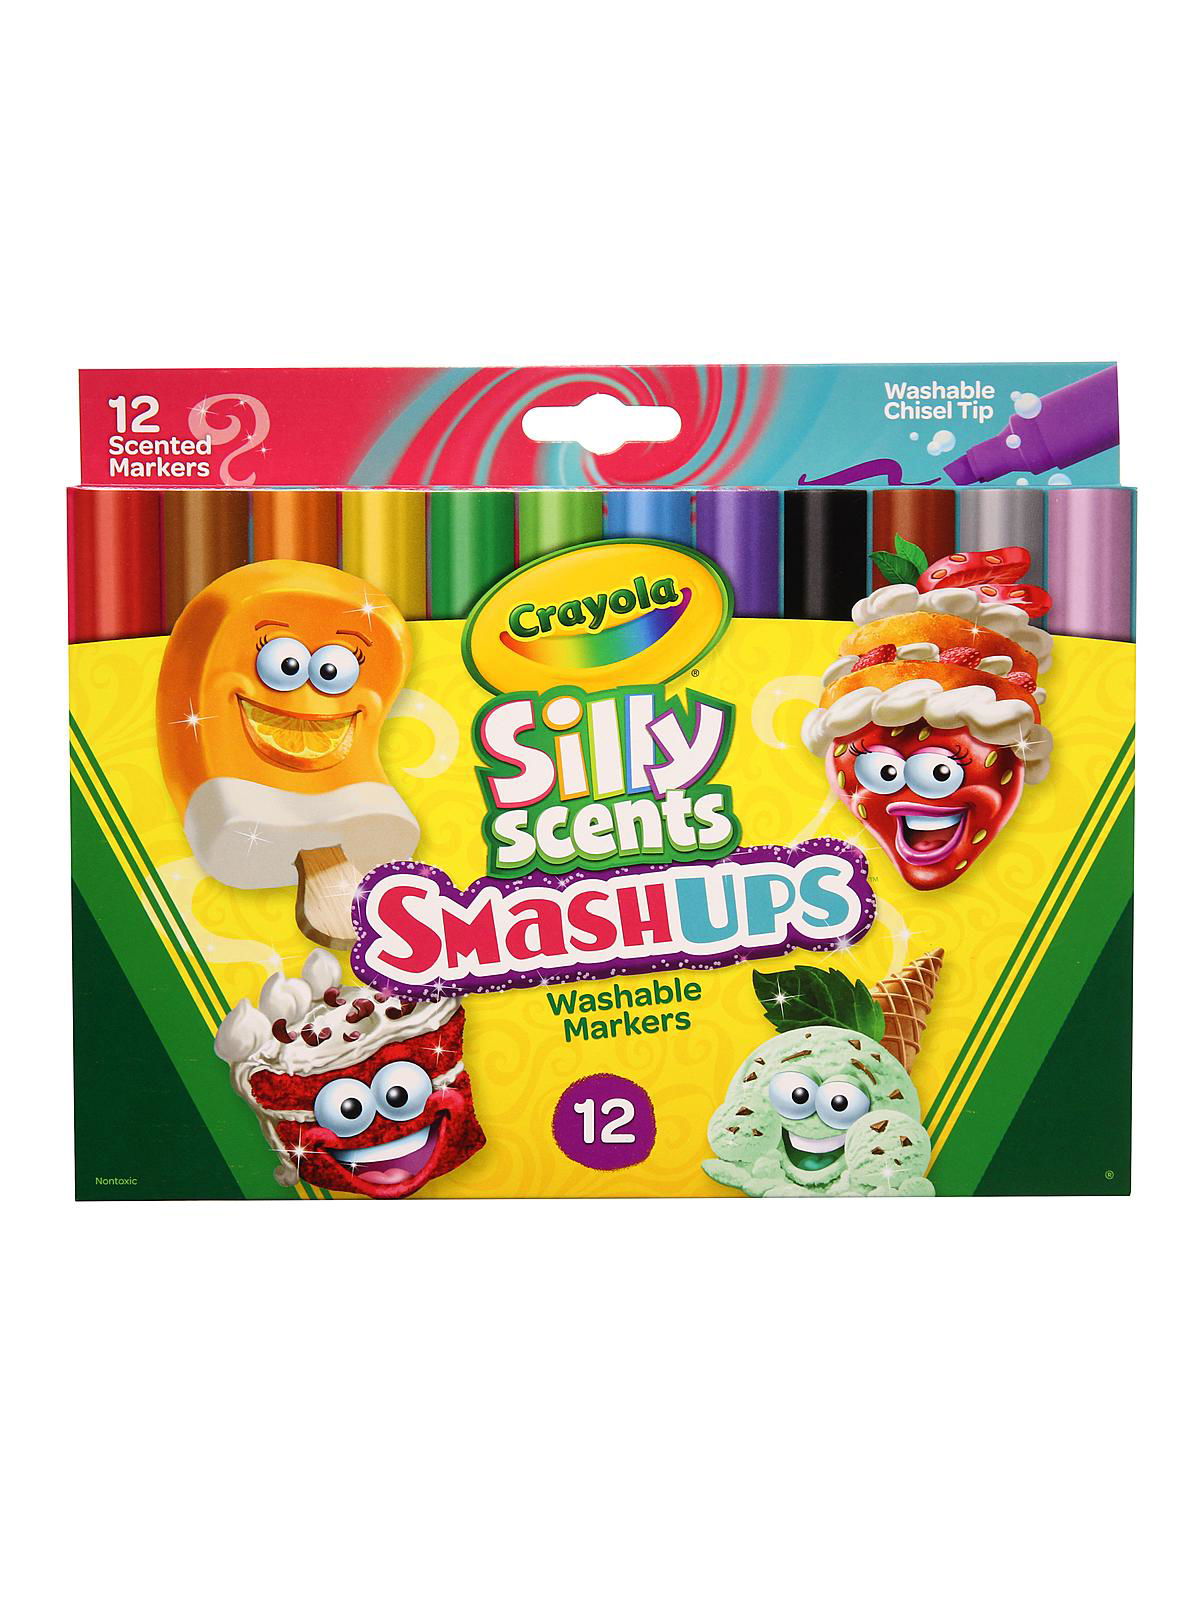 Crayola Silly Scents Smashups Washable Markers